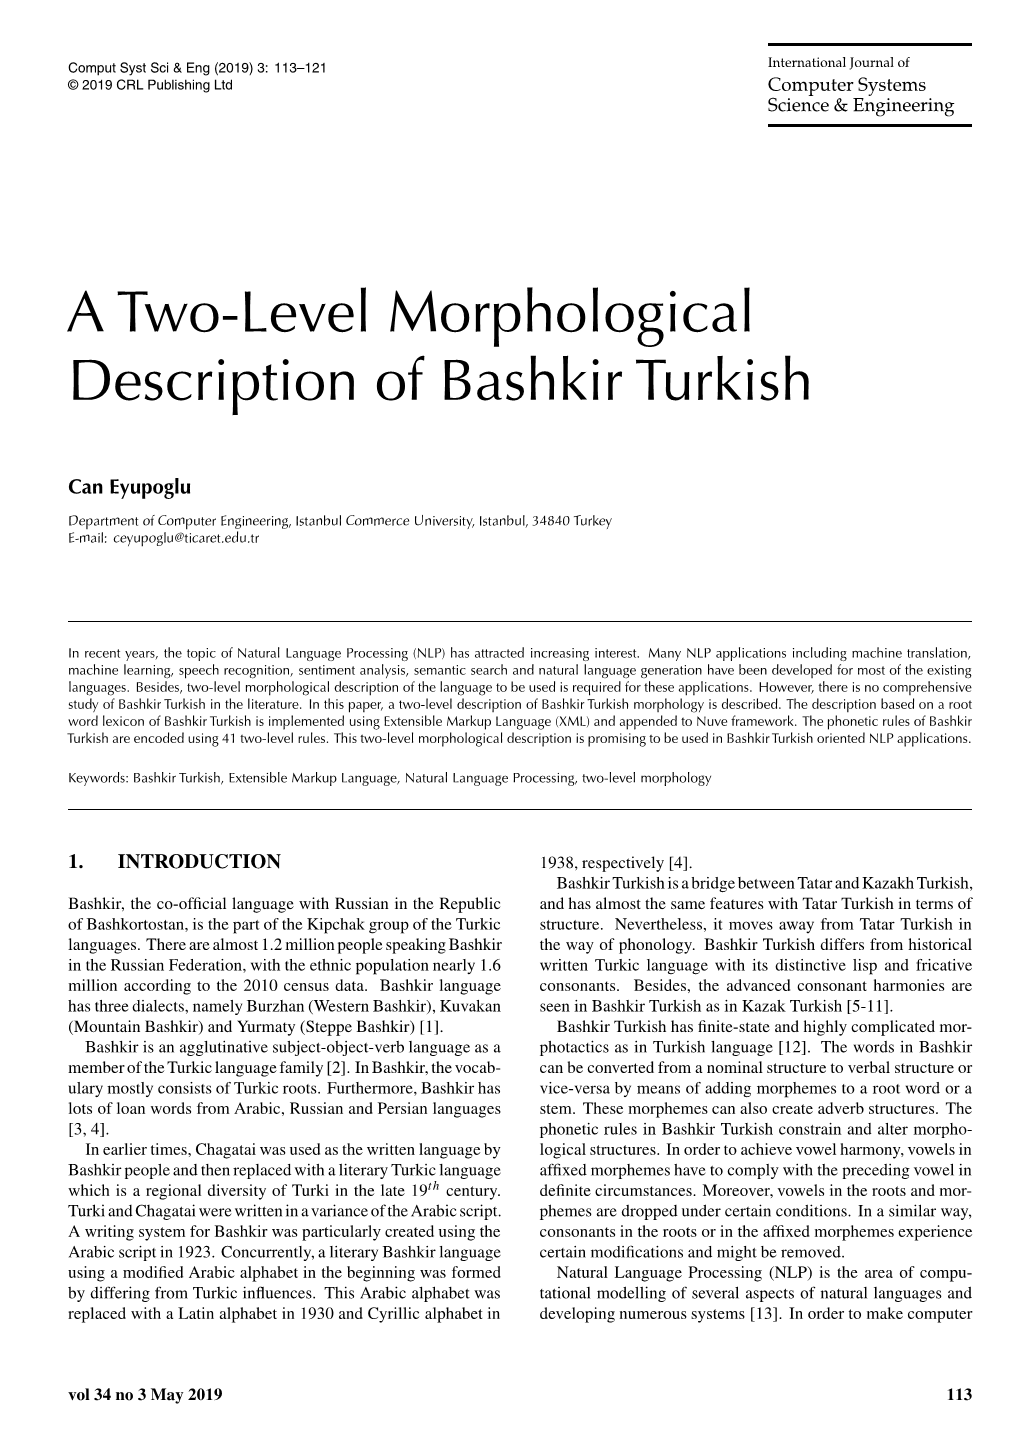 A Two-Level Morphological Description of Bashkir Turkish